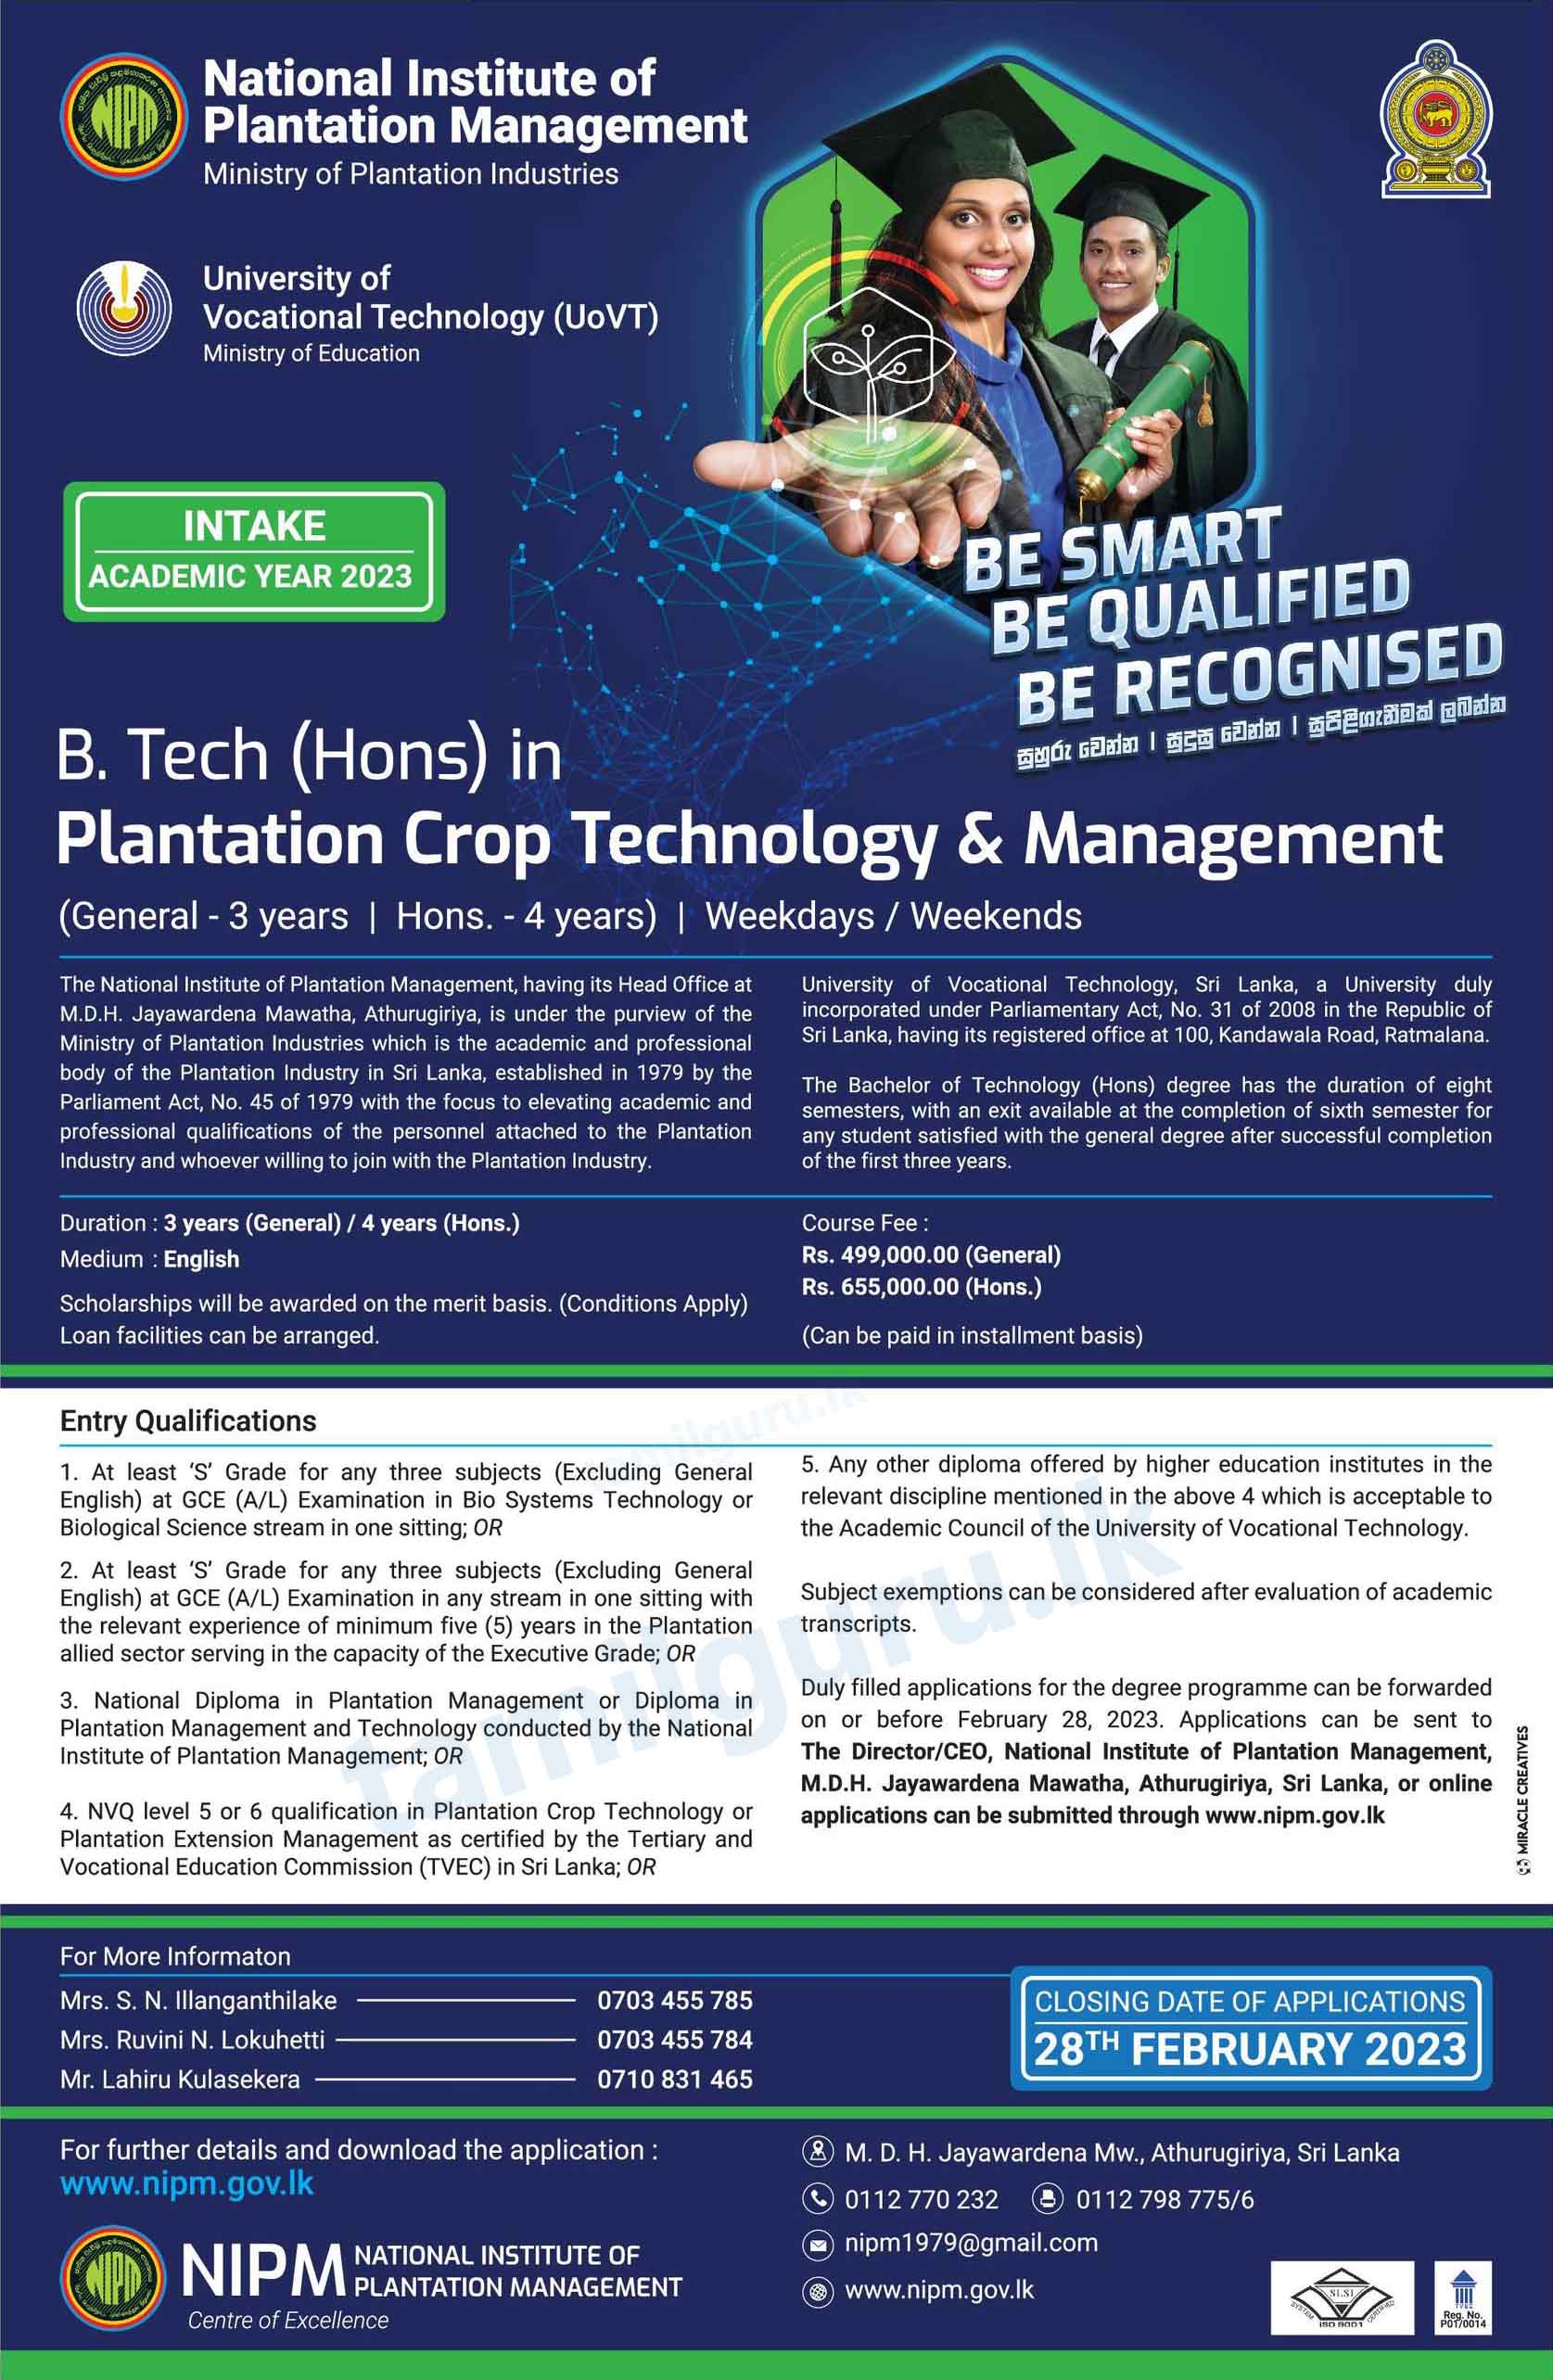 B.Tech (Hons) in Plantation Crop Technology & Management Degree Programme 2023 - NIPM & UNIVOTEC